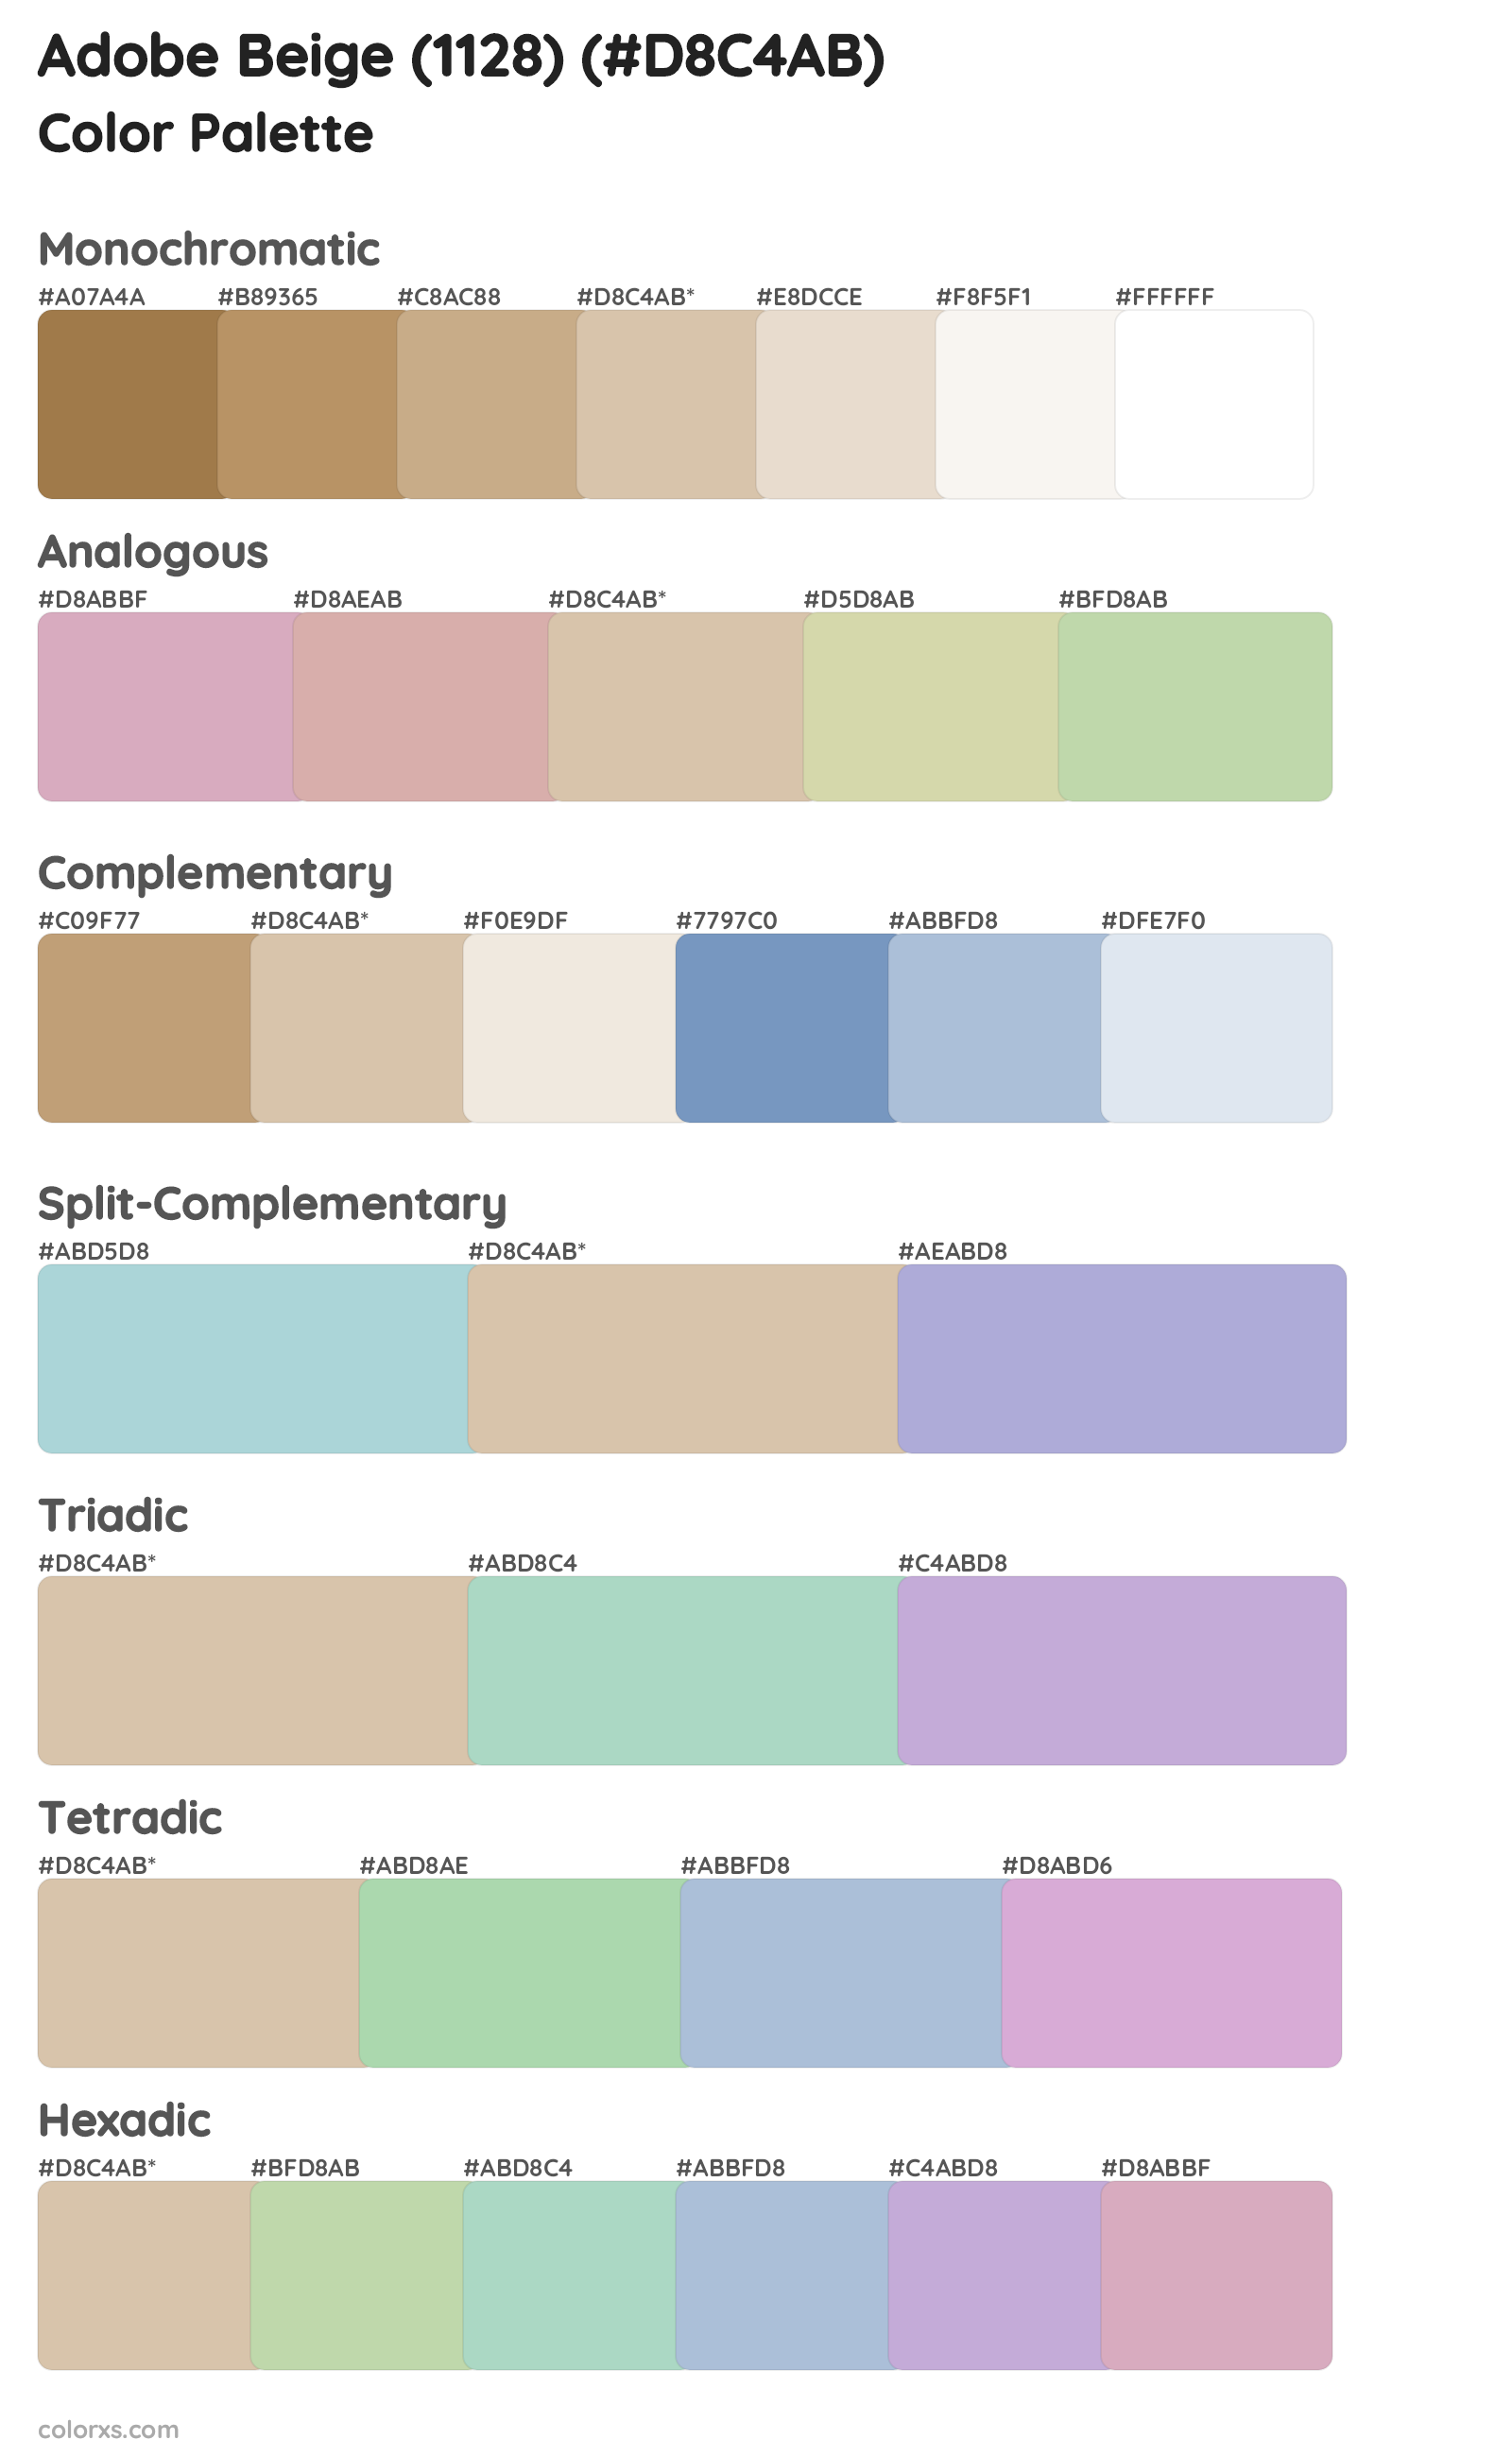 Adobe Beige (1128) Color Scheme Palettes